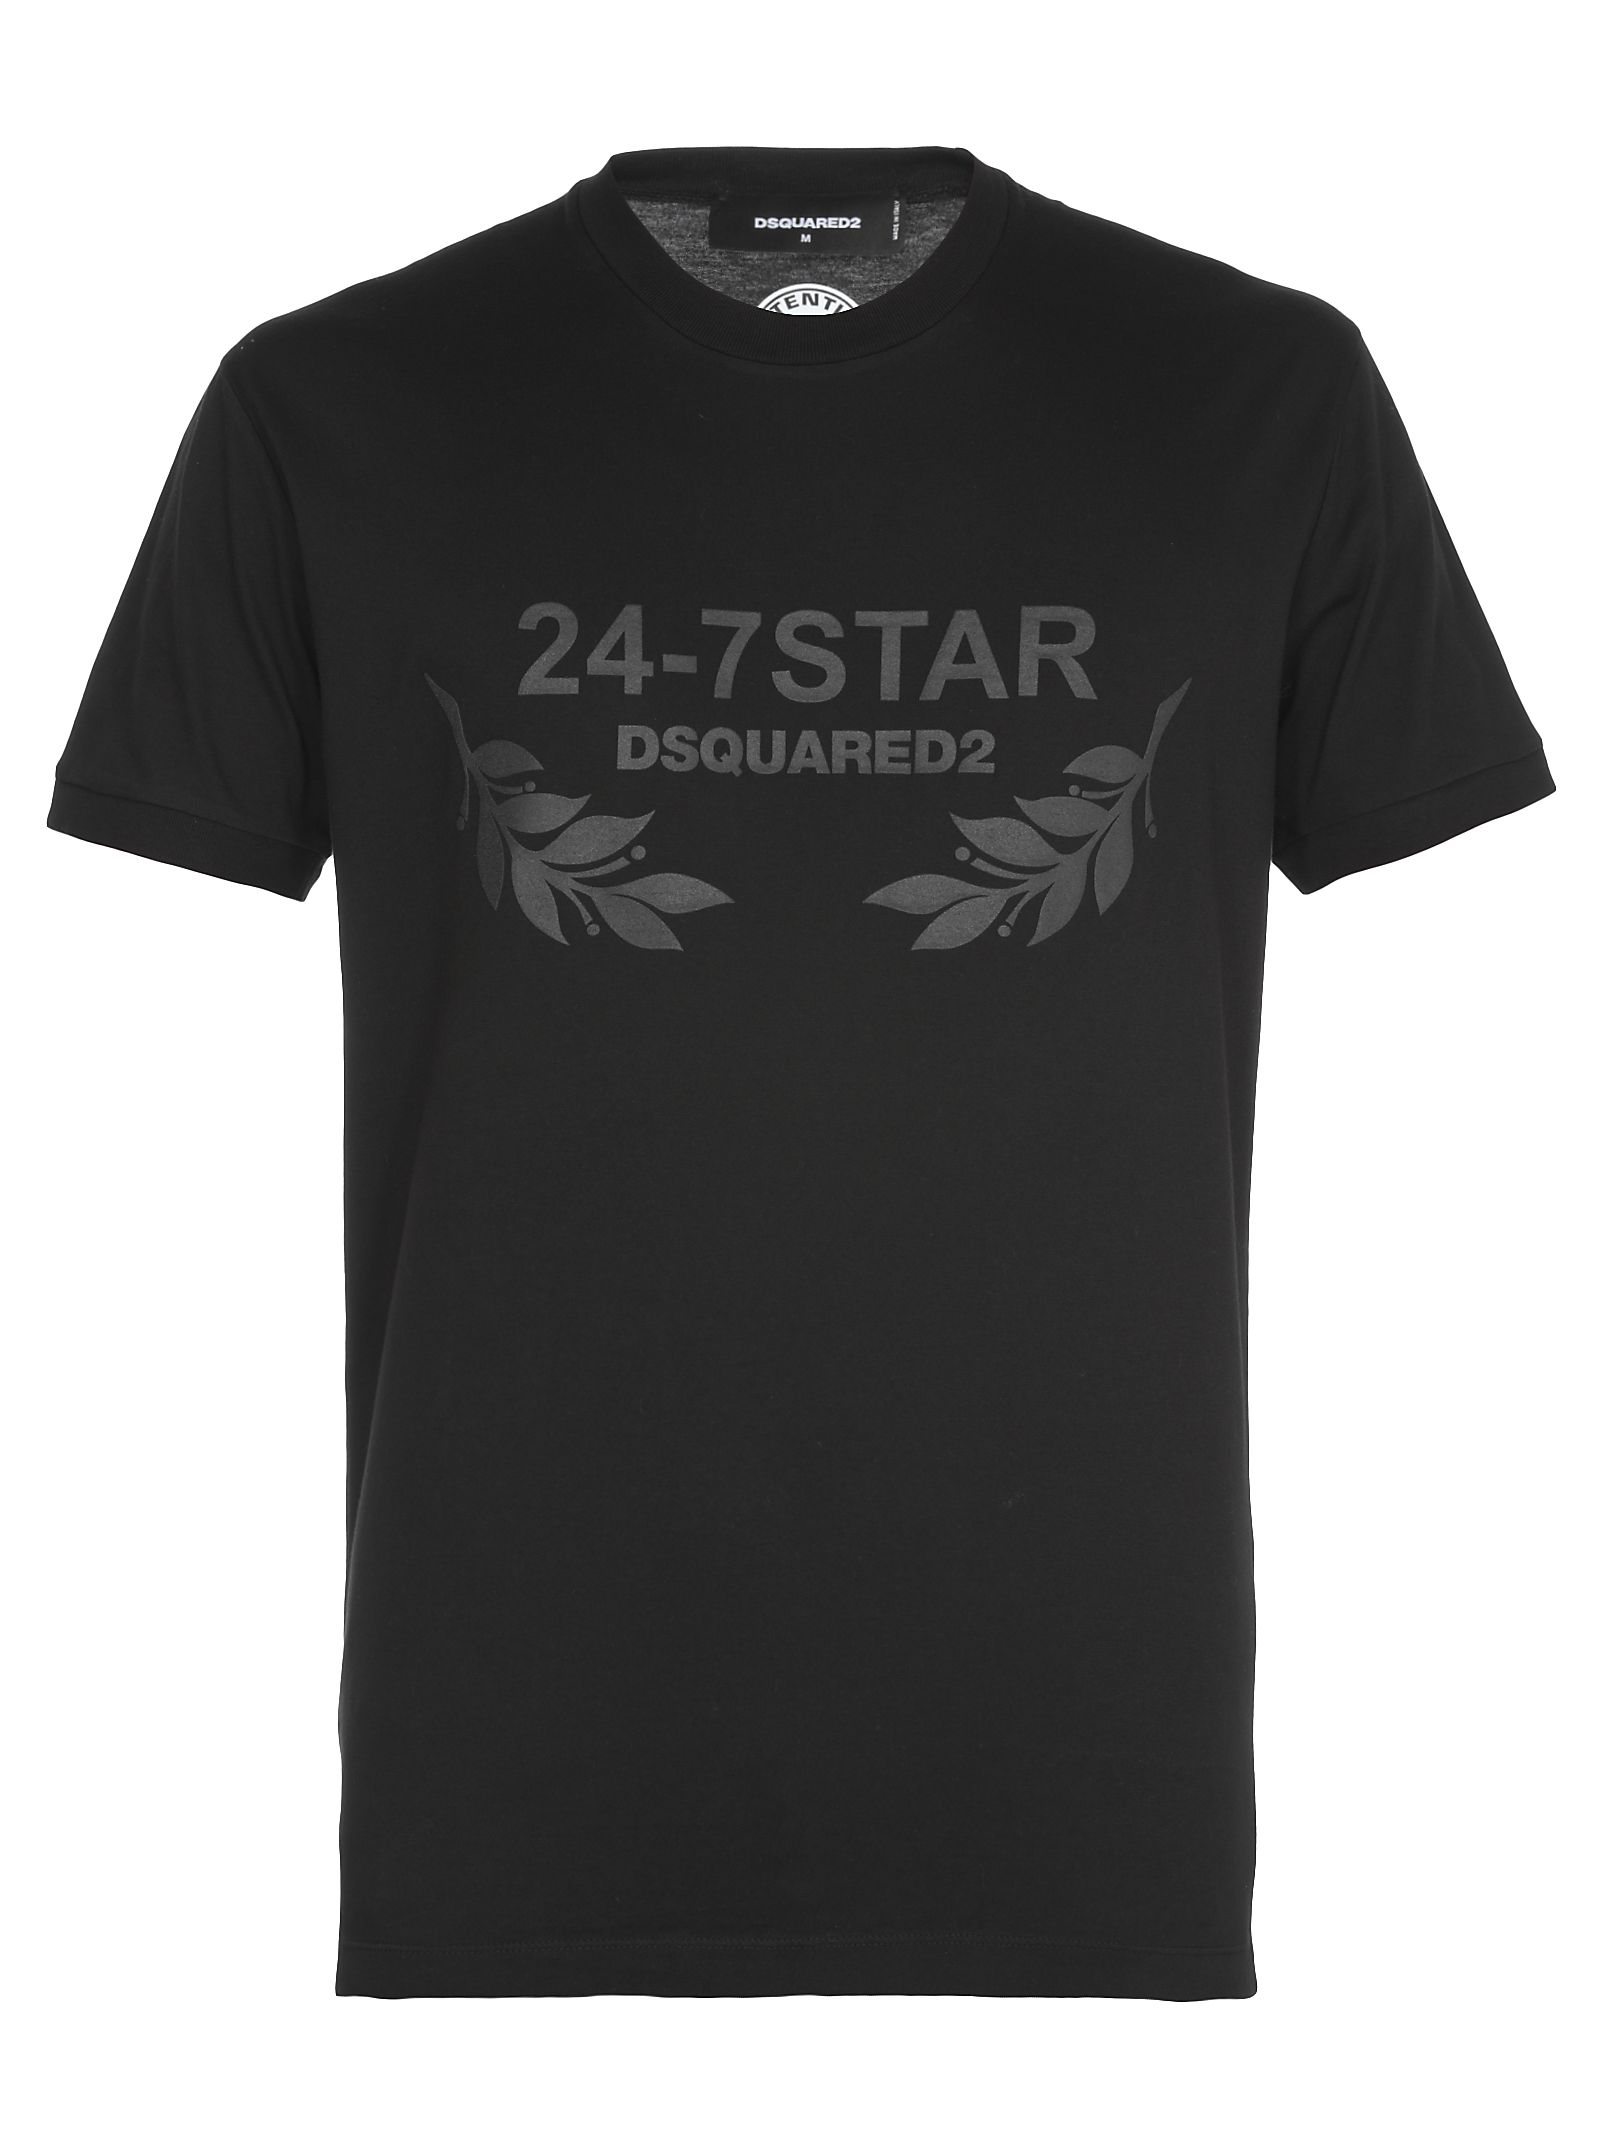 24-7 star dsquared t shirt